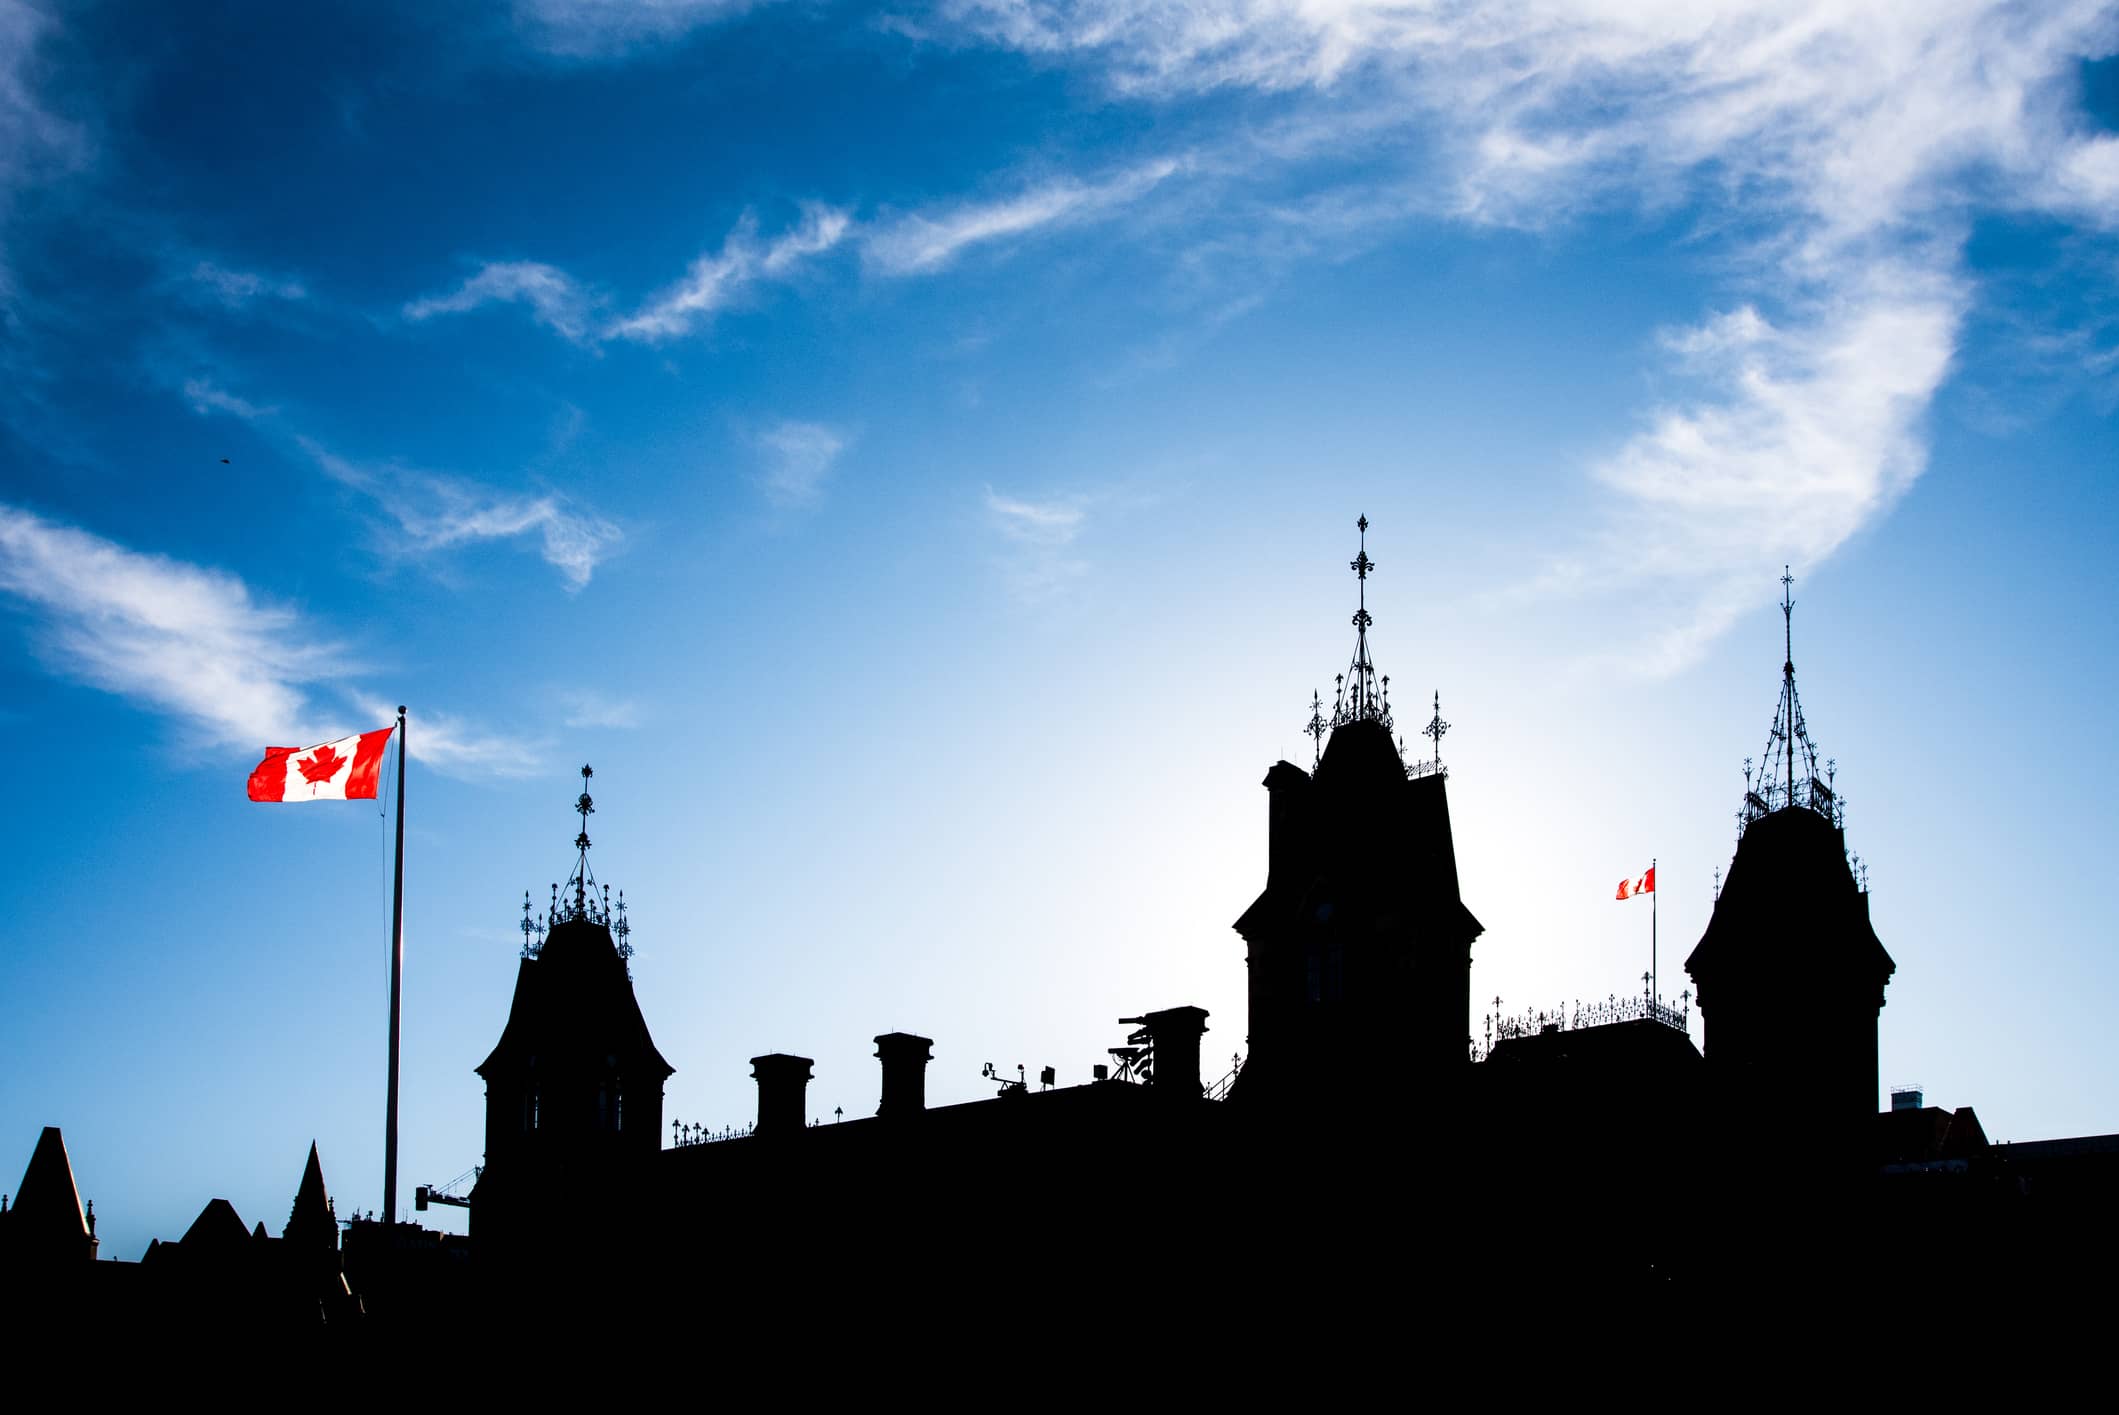 Canada's Parliament Buildings